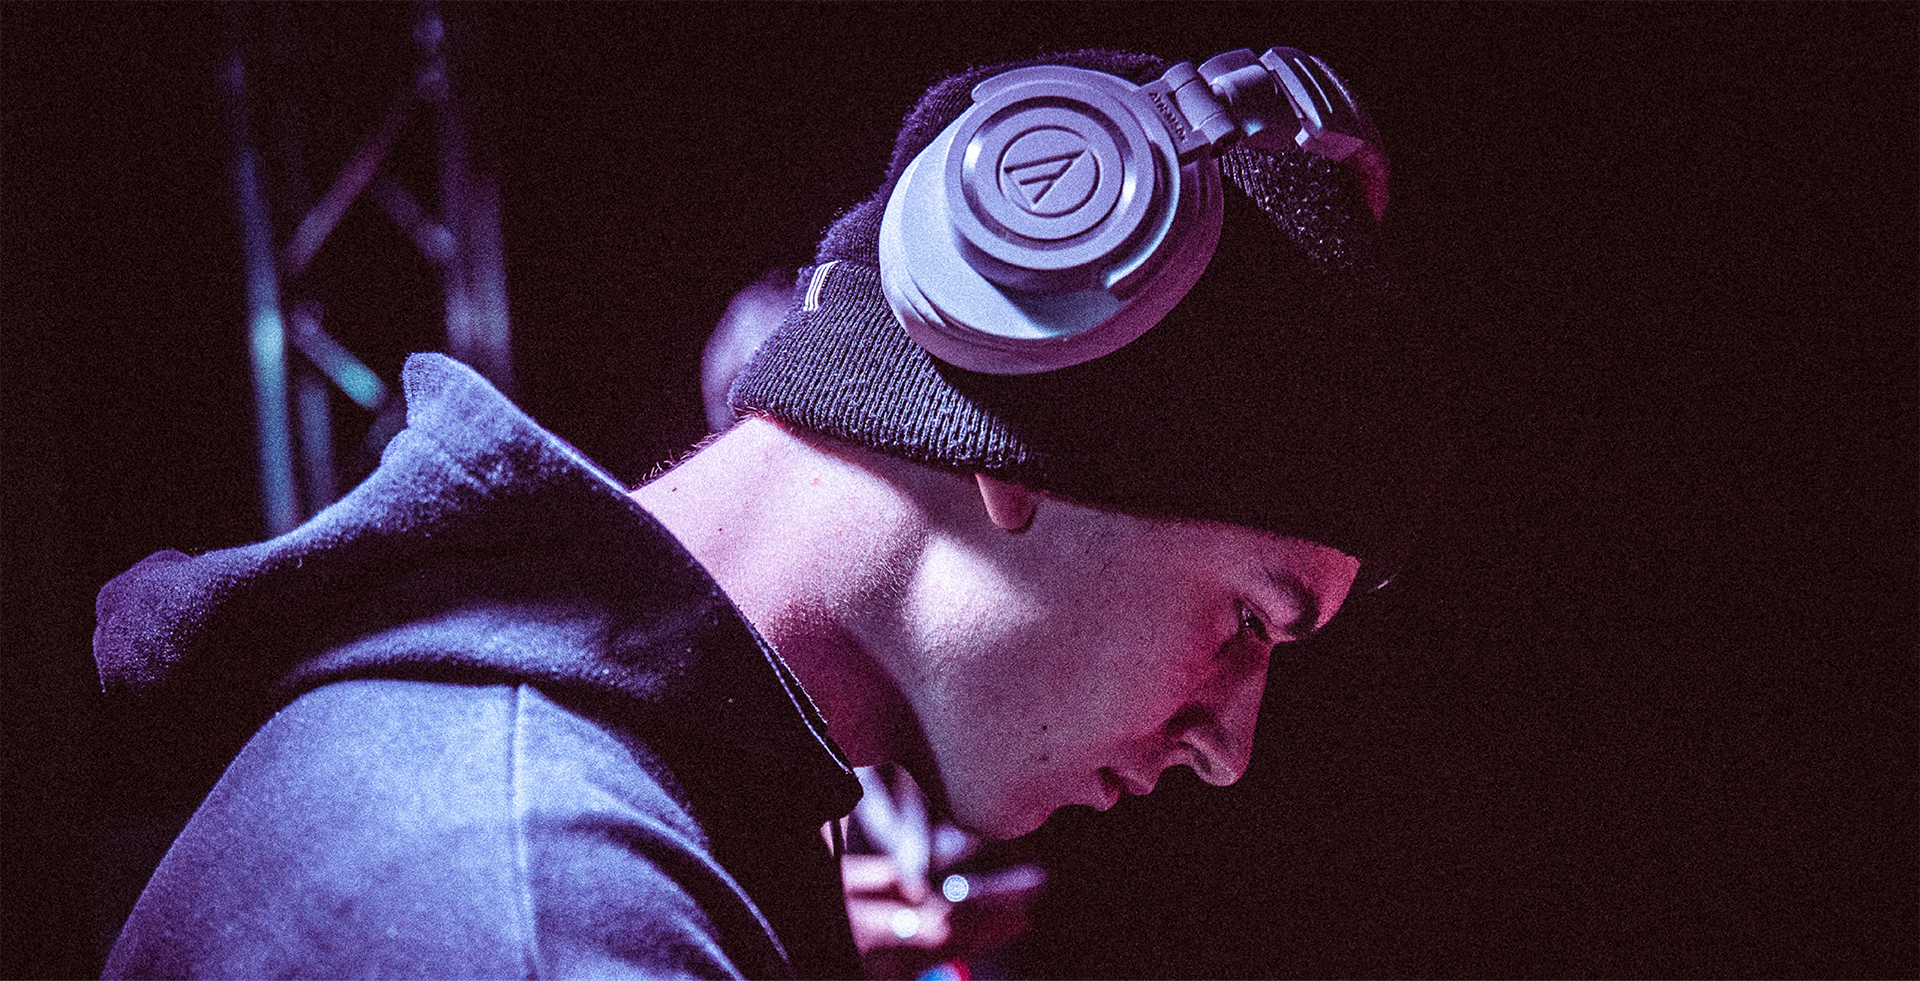 A male wearing over-ear headphones